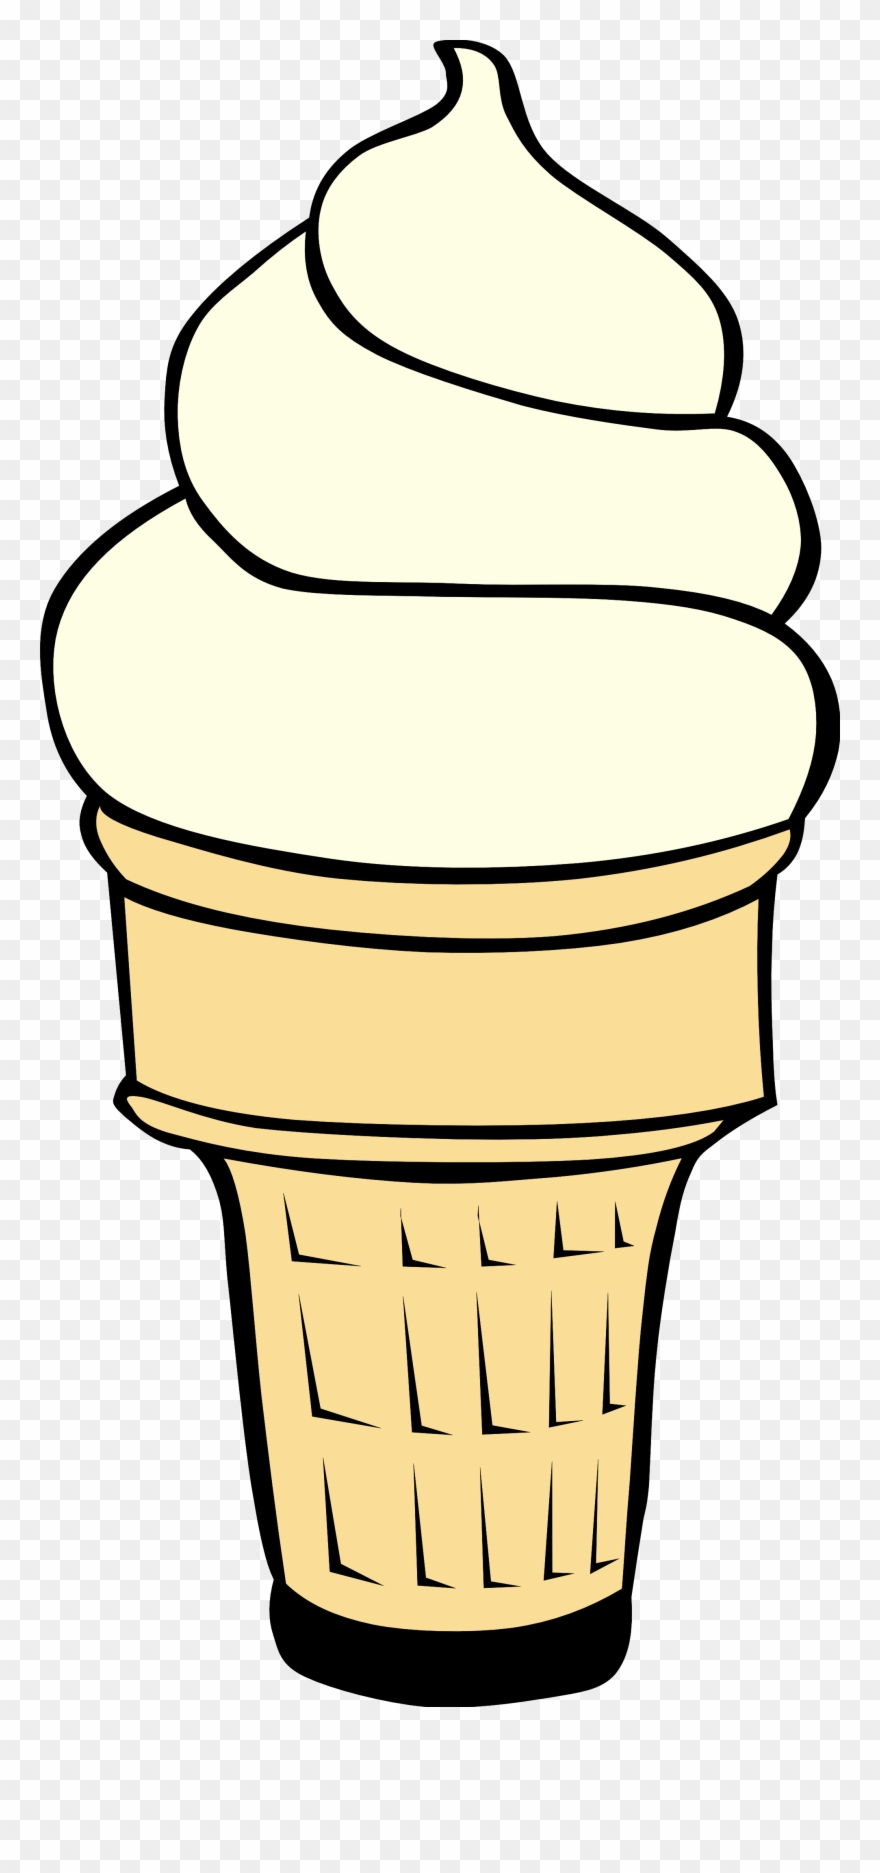 Clipart Fast Food Desserts Ice Cream Cones Soft Serve